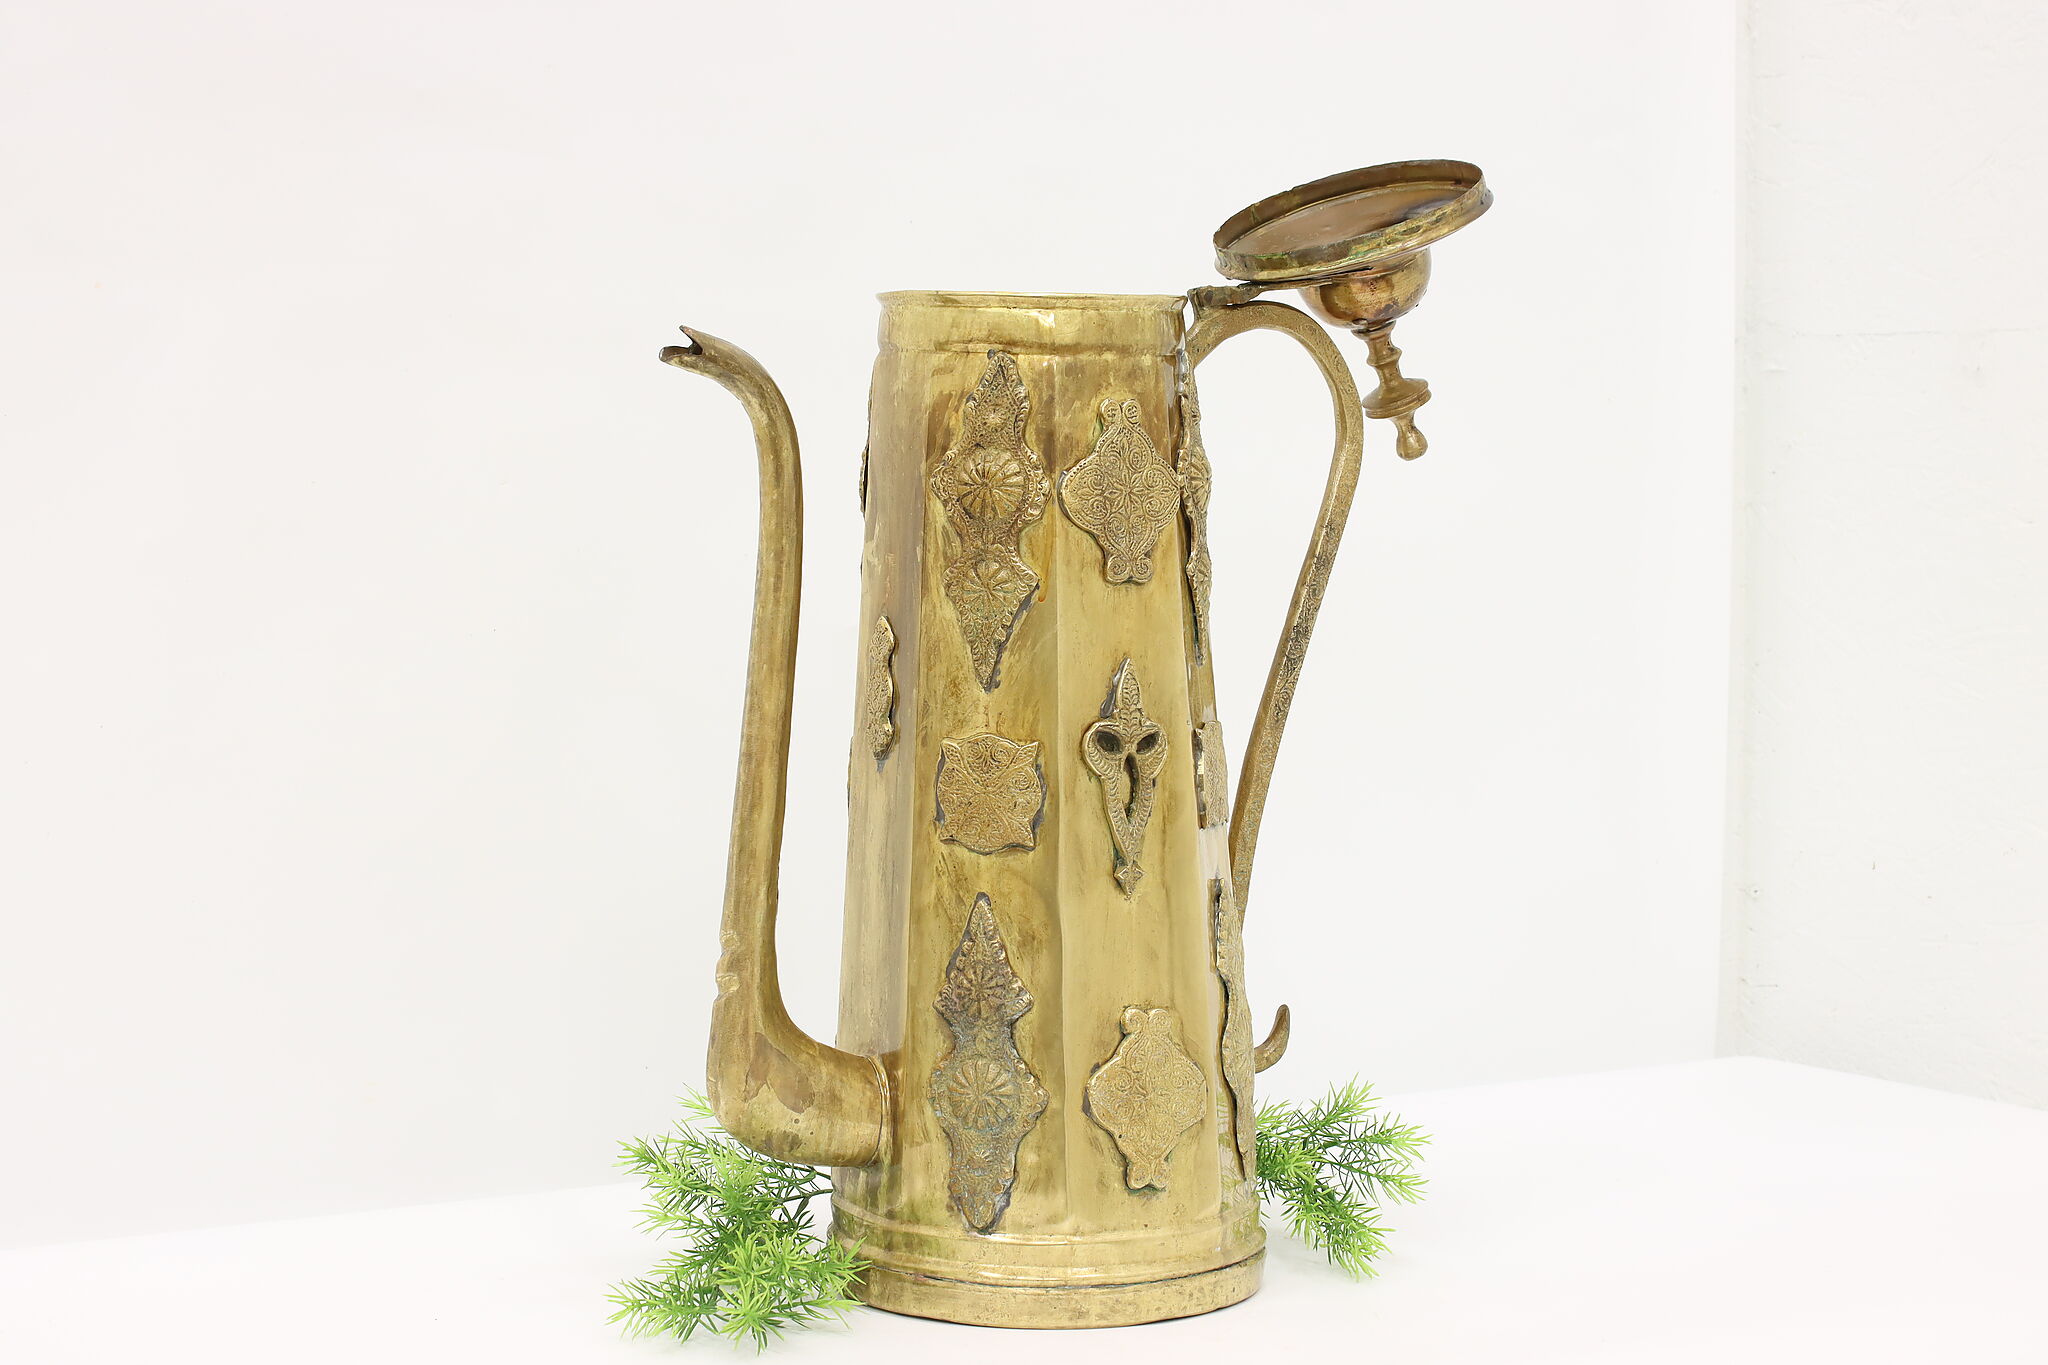 Persian Brass & Copper Antique Large Banquet Ceremonial Teapot or Kettle